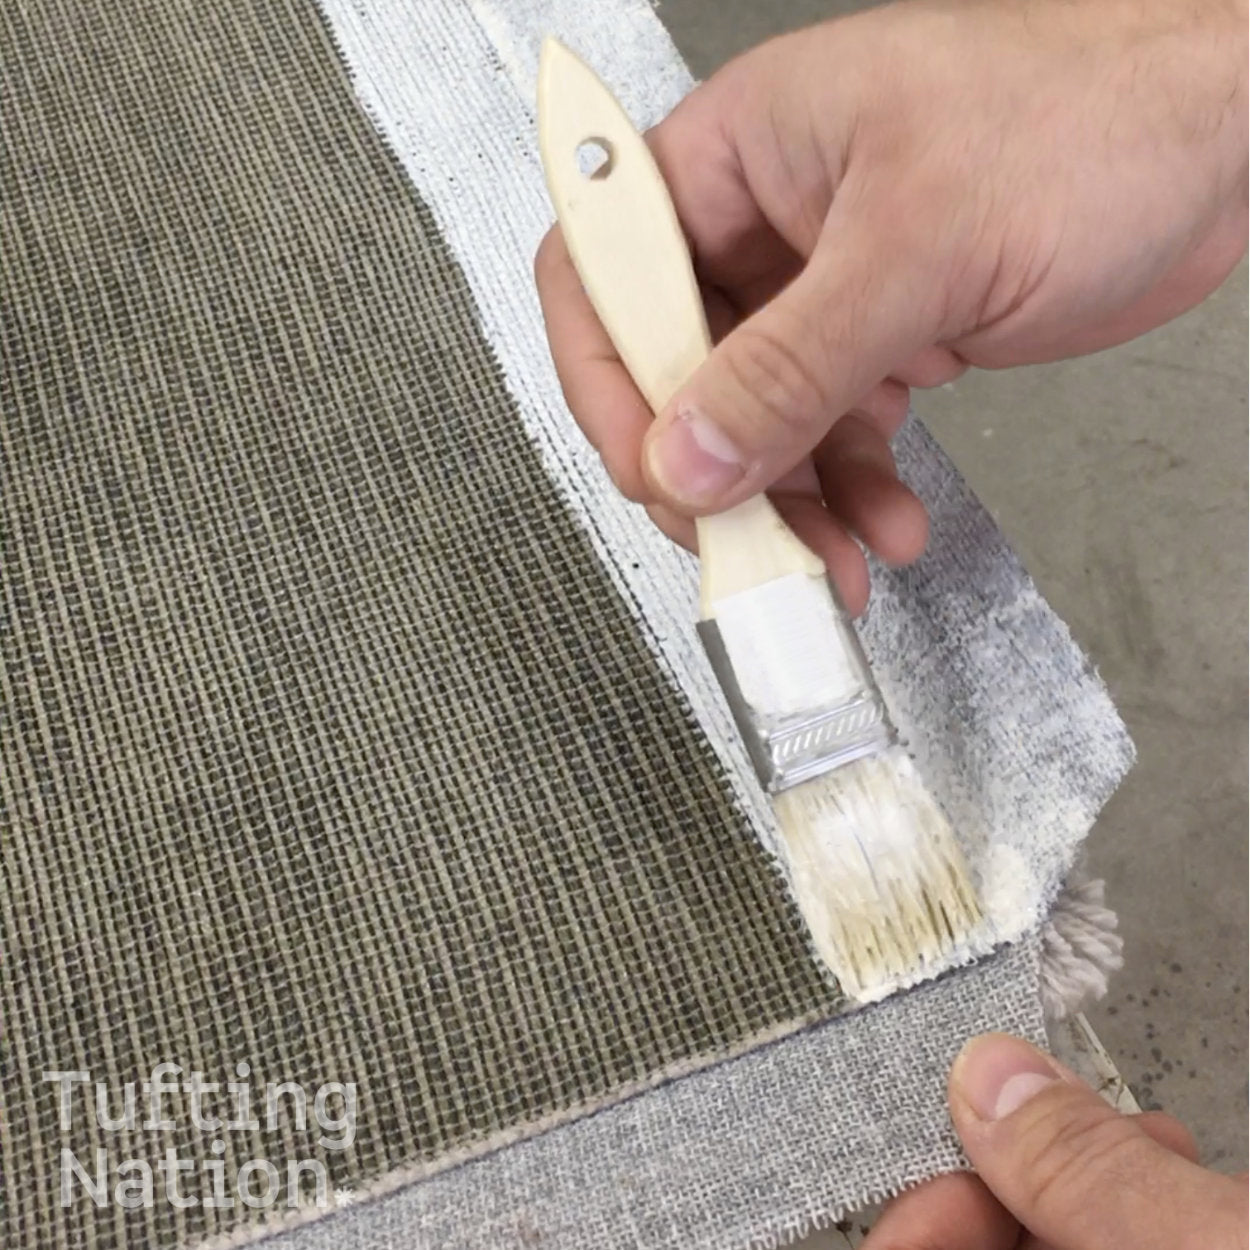 It's glueing time – Rugme carpet